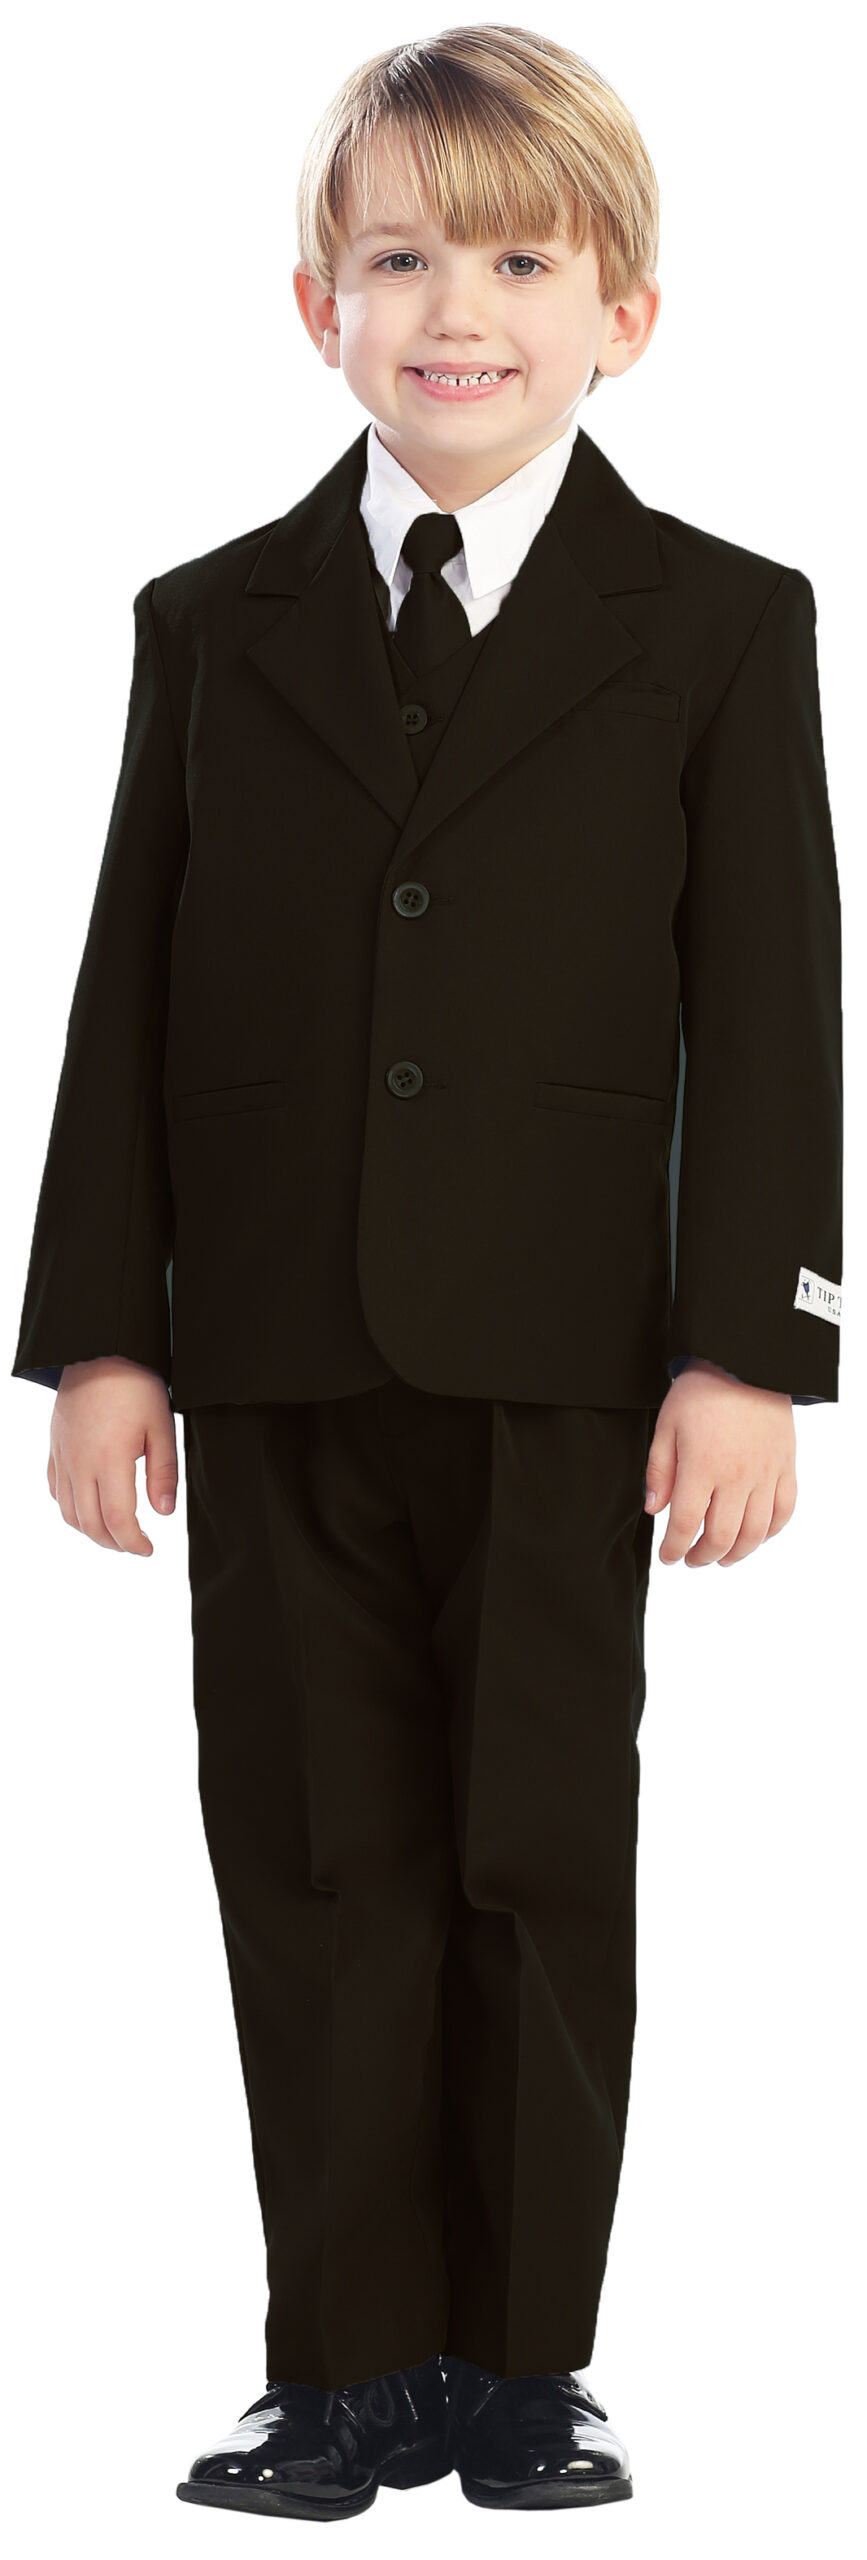 Avery Hill 5-Piece Boy's 2-Button Dress Suit Full-Back Vest - Brown Size 6